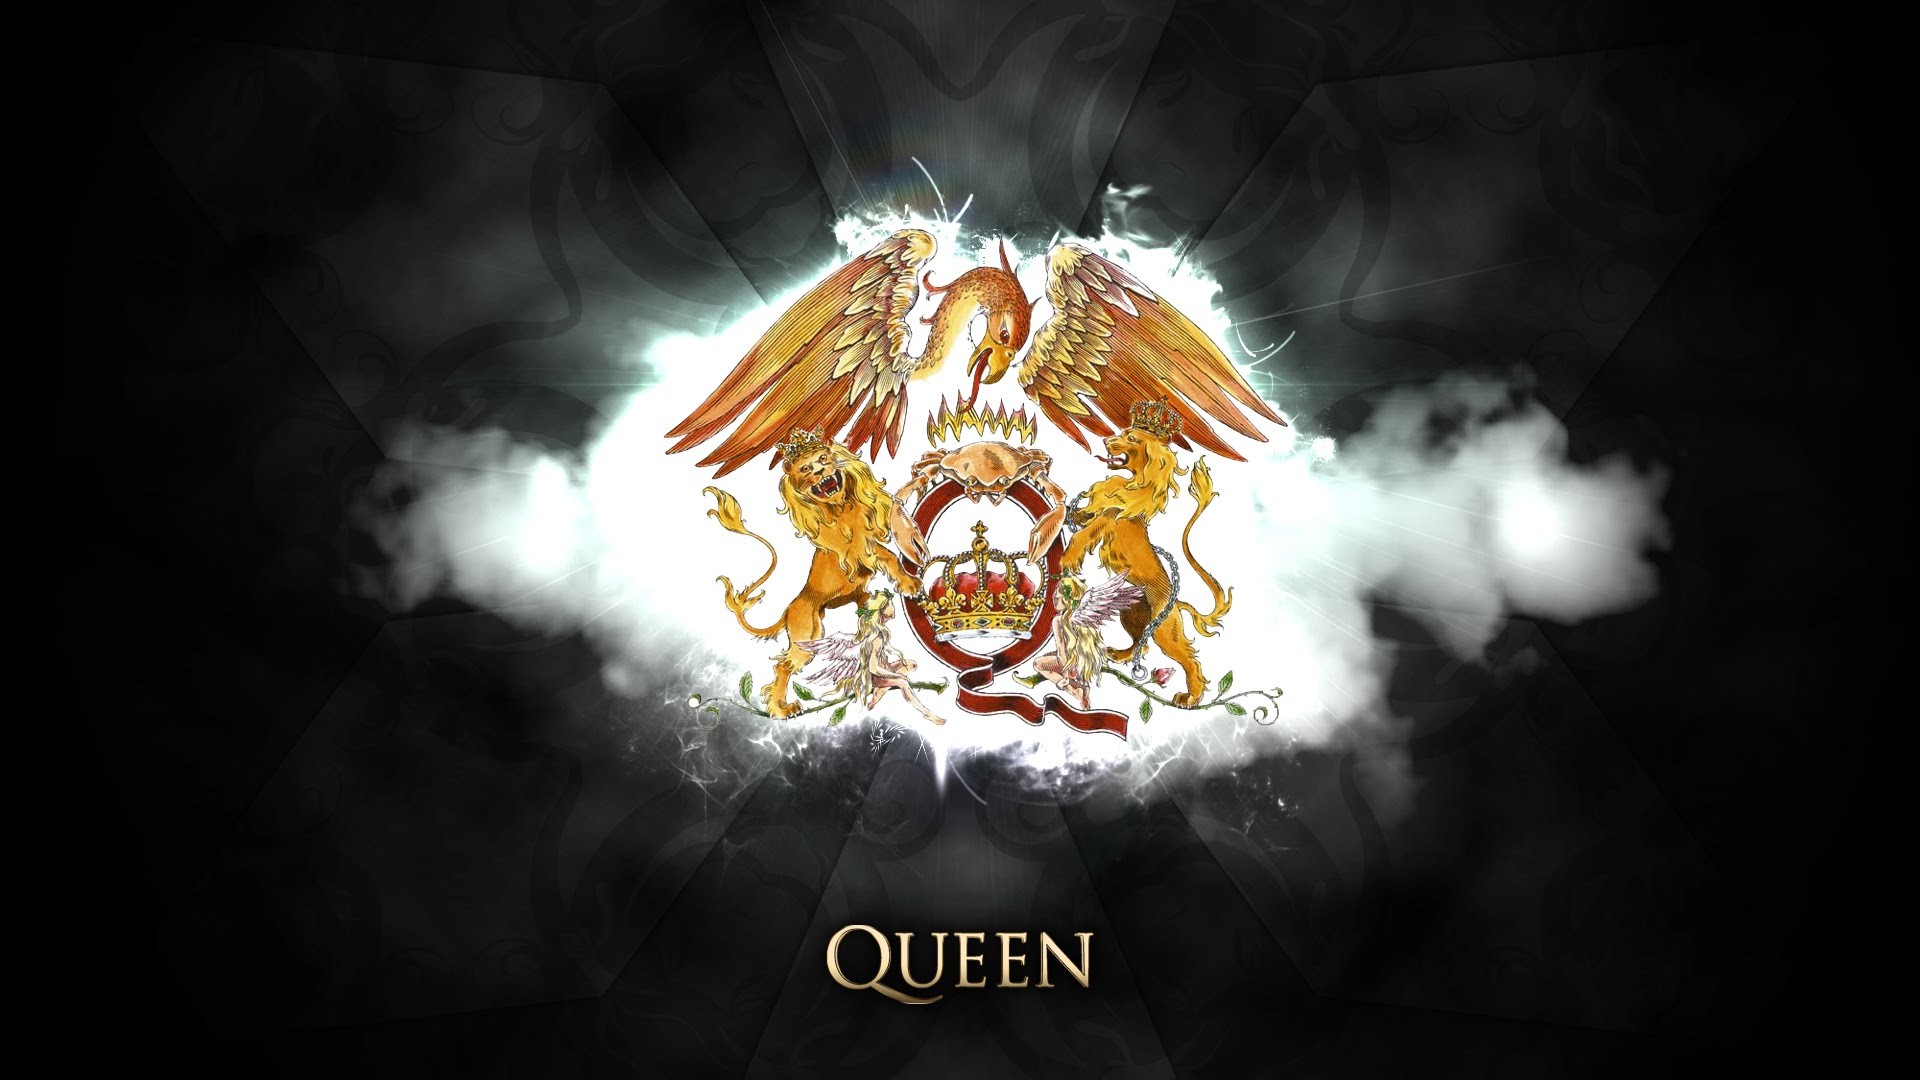 Free Queen Logo Wallpaper Queen Logo Wallpaper Download Wallpaperuse 1